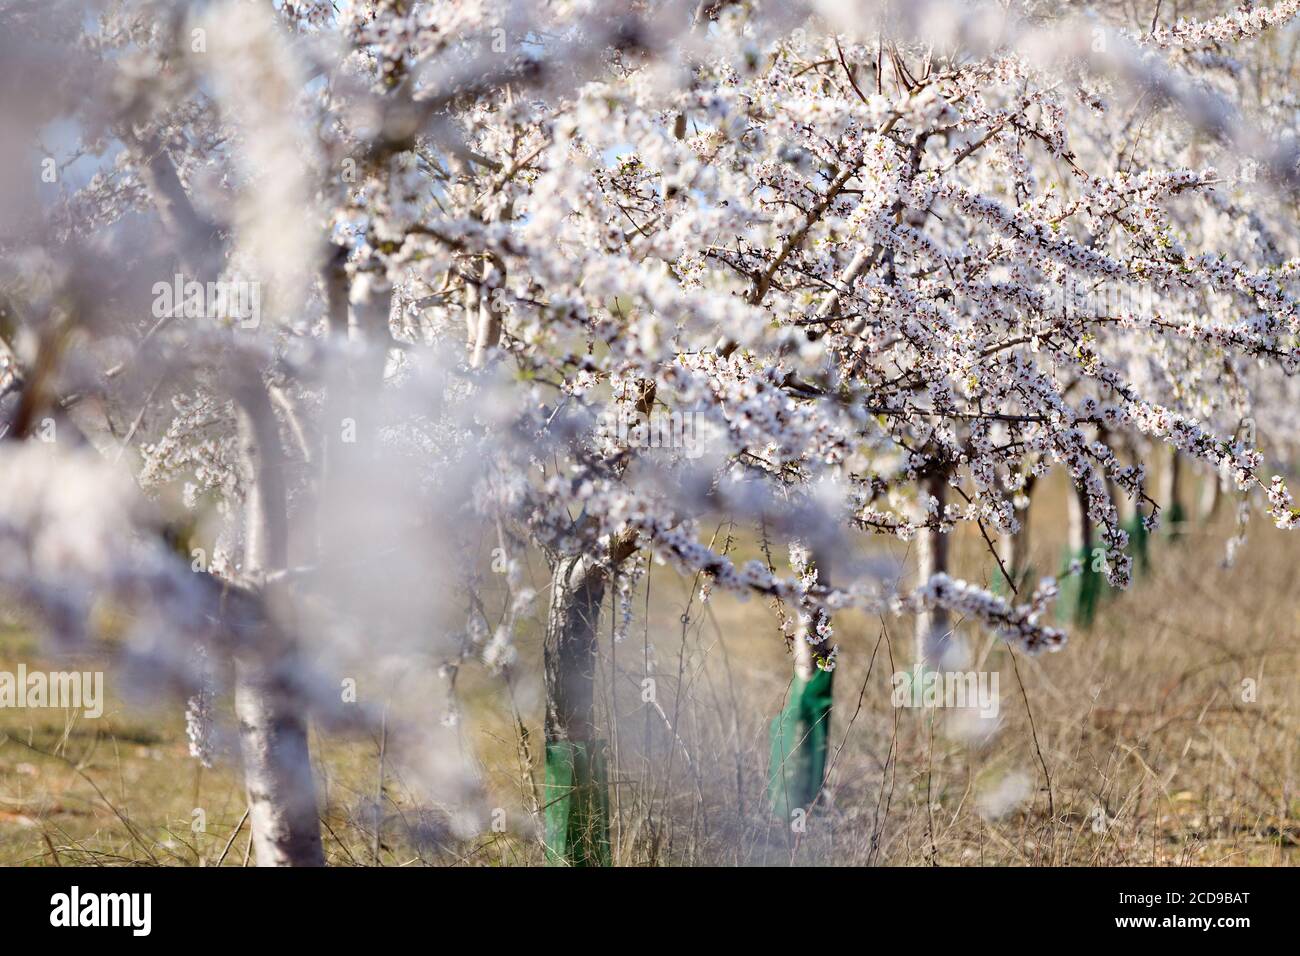 France, Alpes de Haute Provence, Brunet, almond trees in bloom Stock Photo